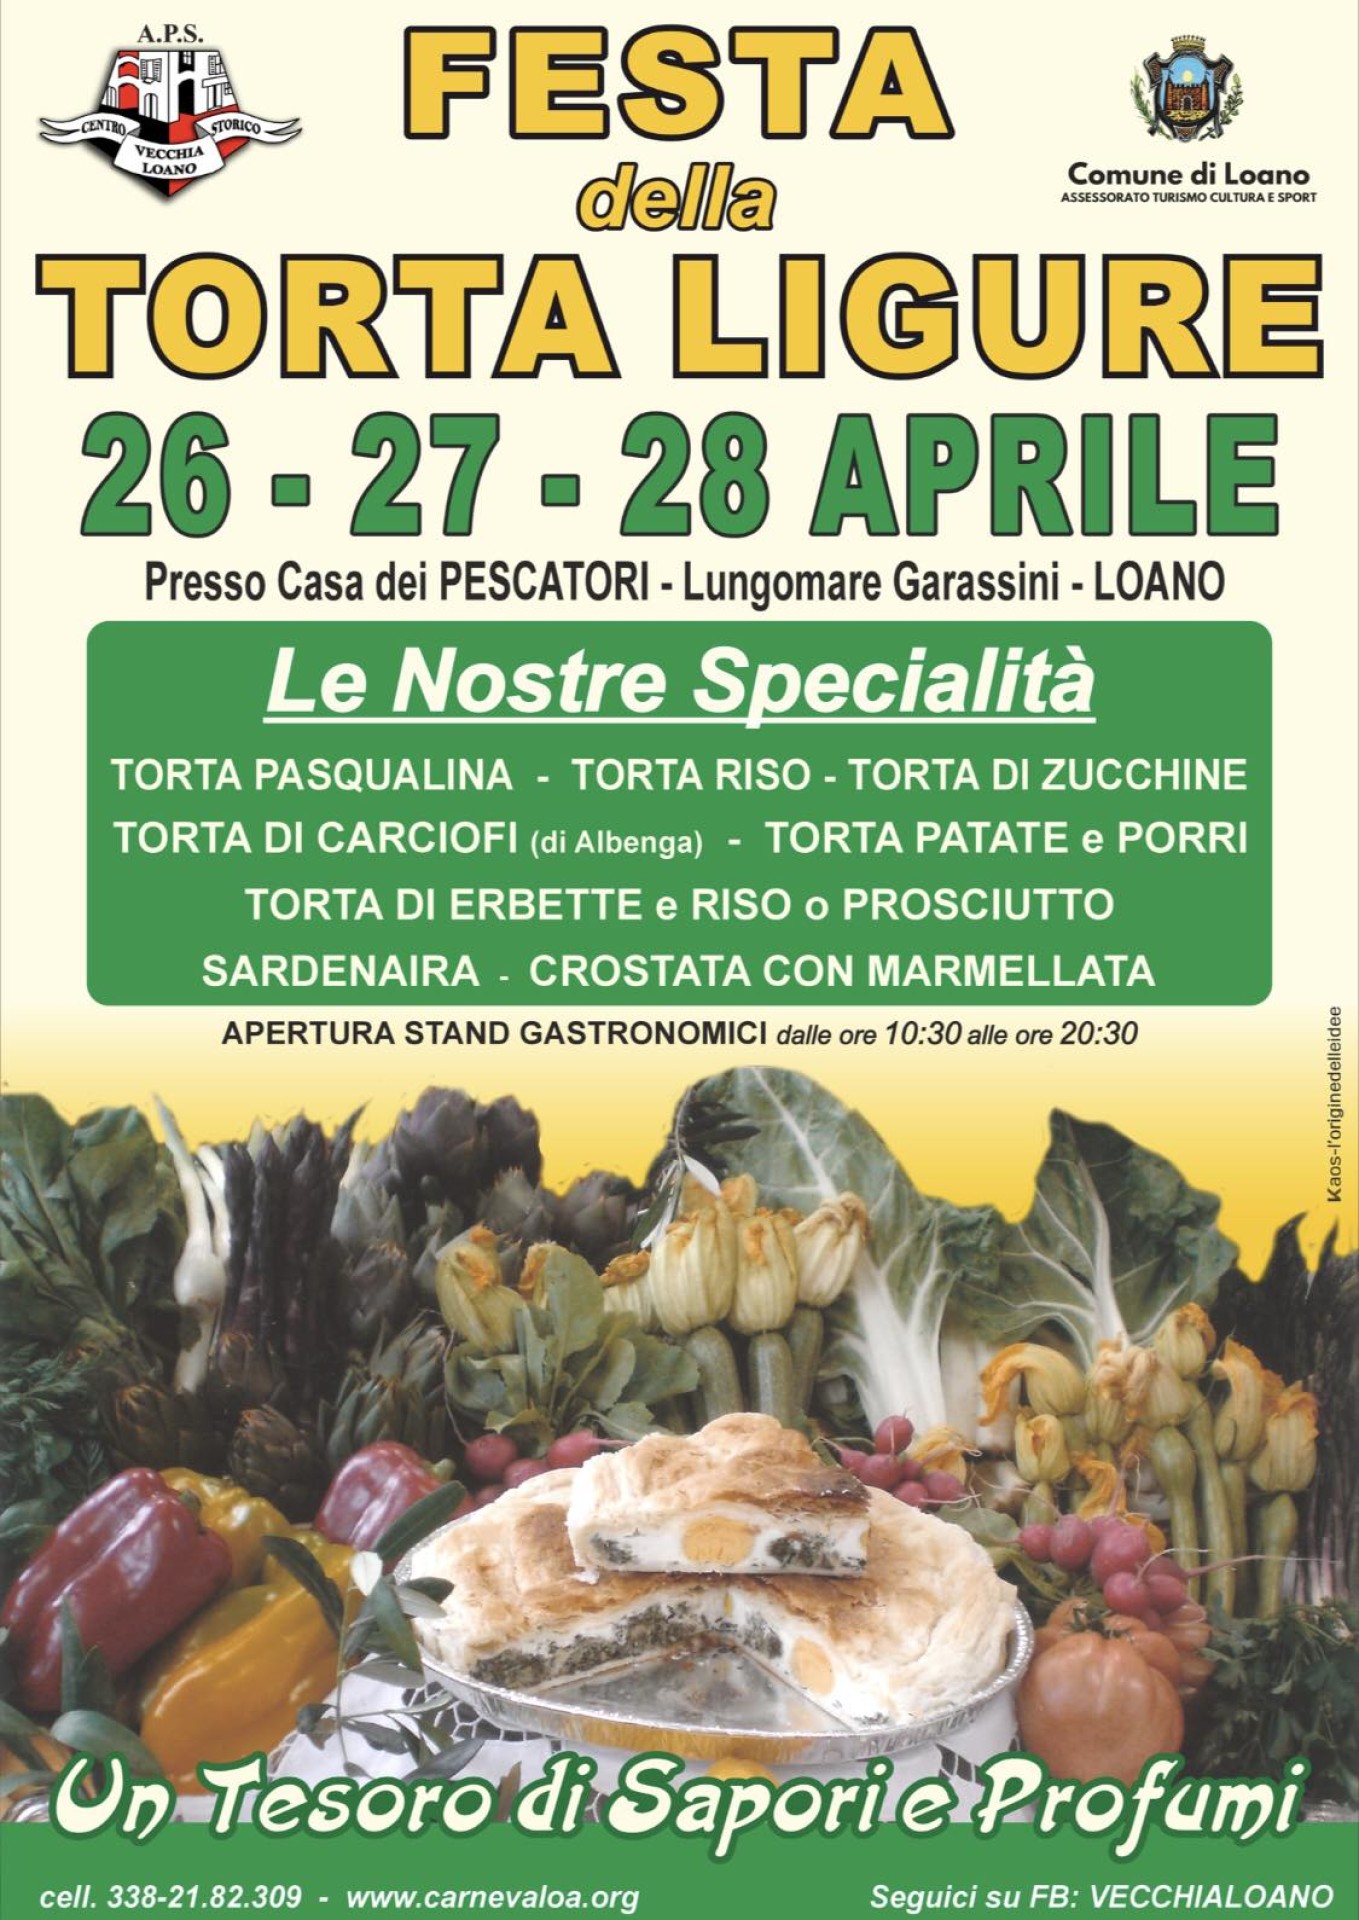 FESTA DELLA TORTA LIGURE 2024